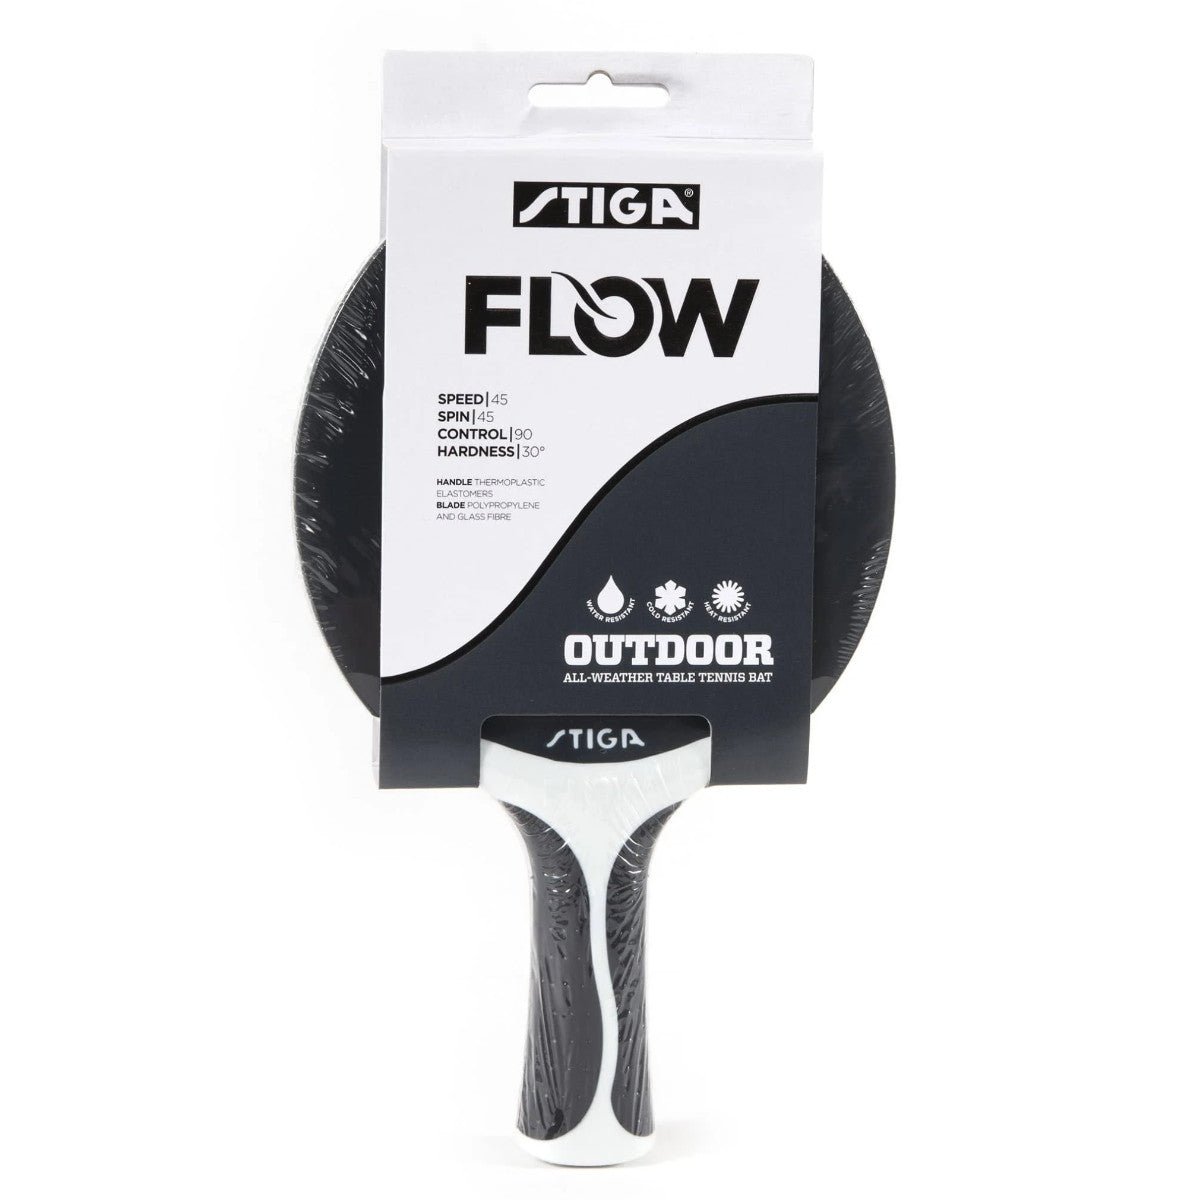 STIGA Flow Outdoor Table Tennis Racket (Black)